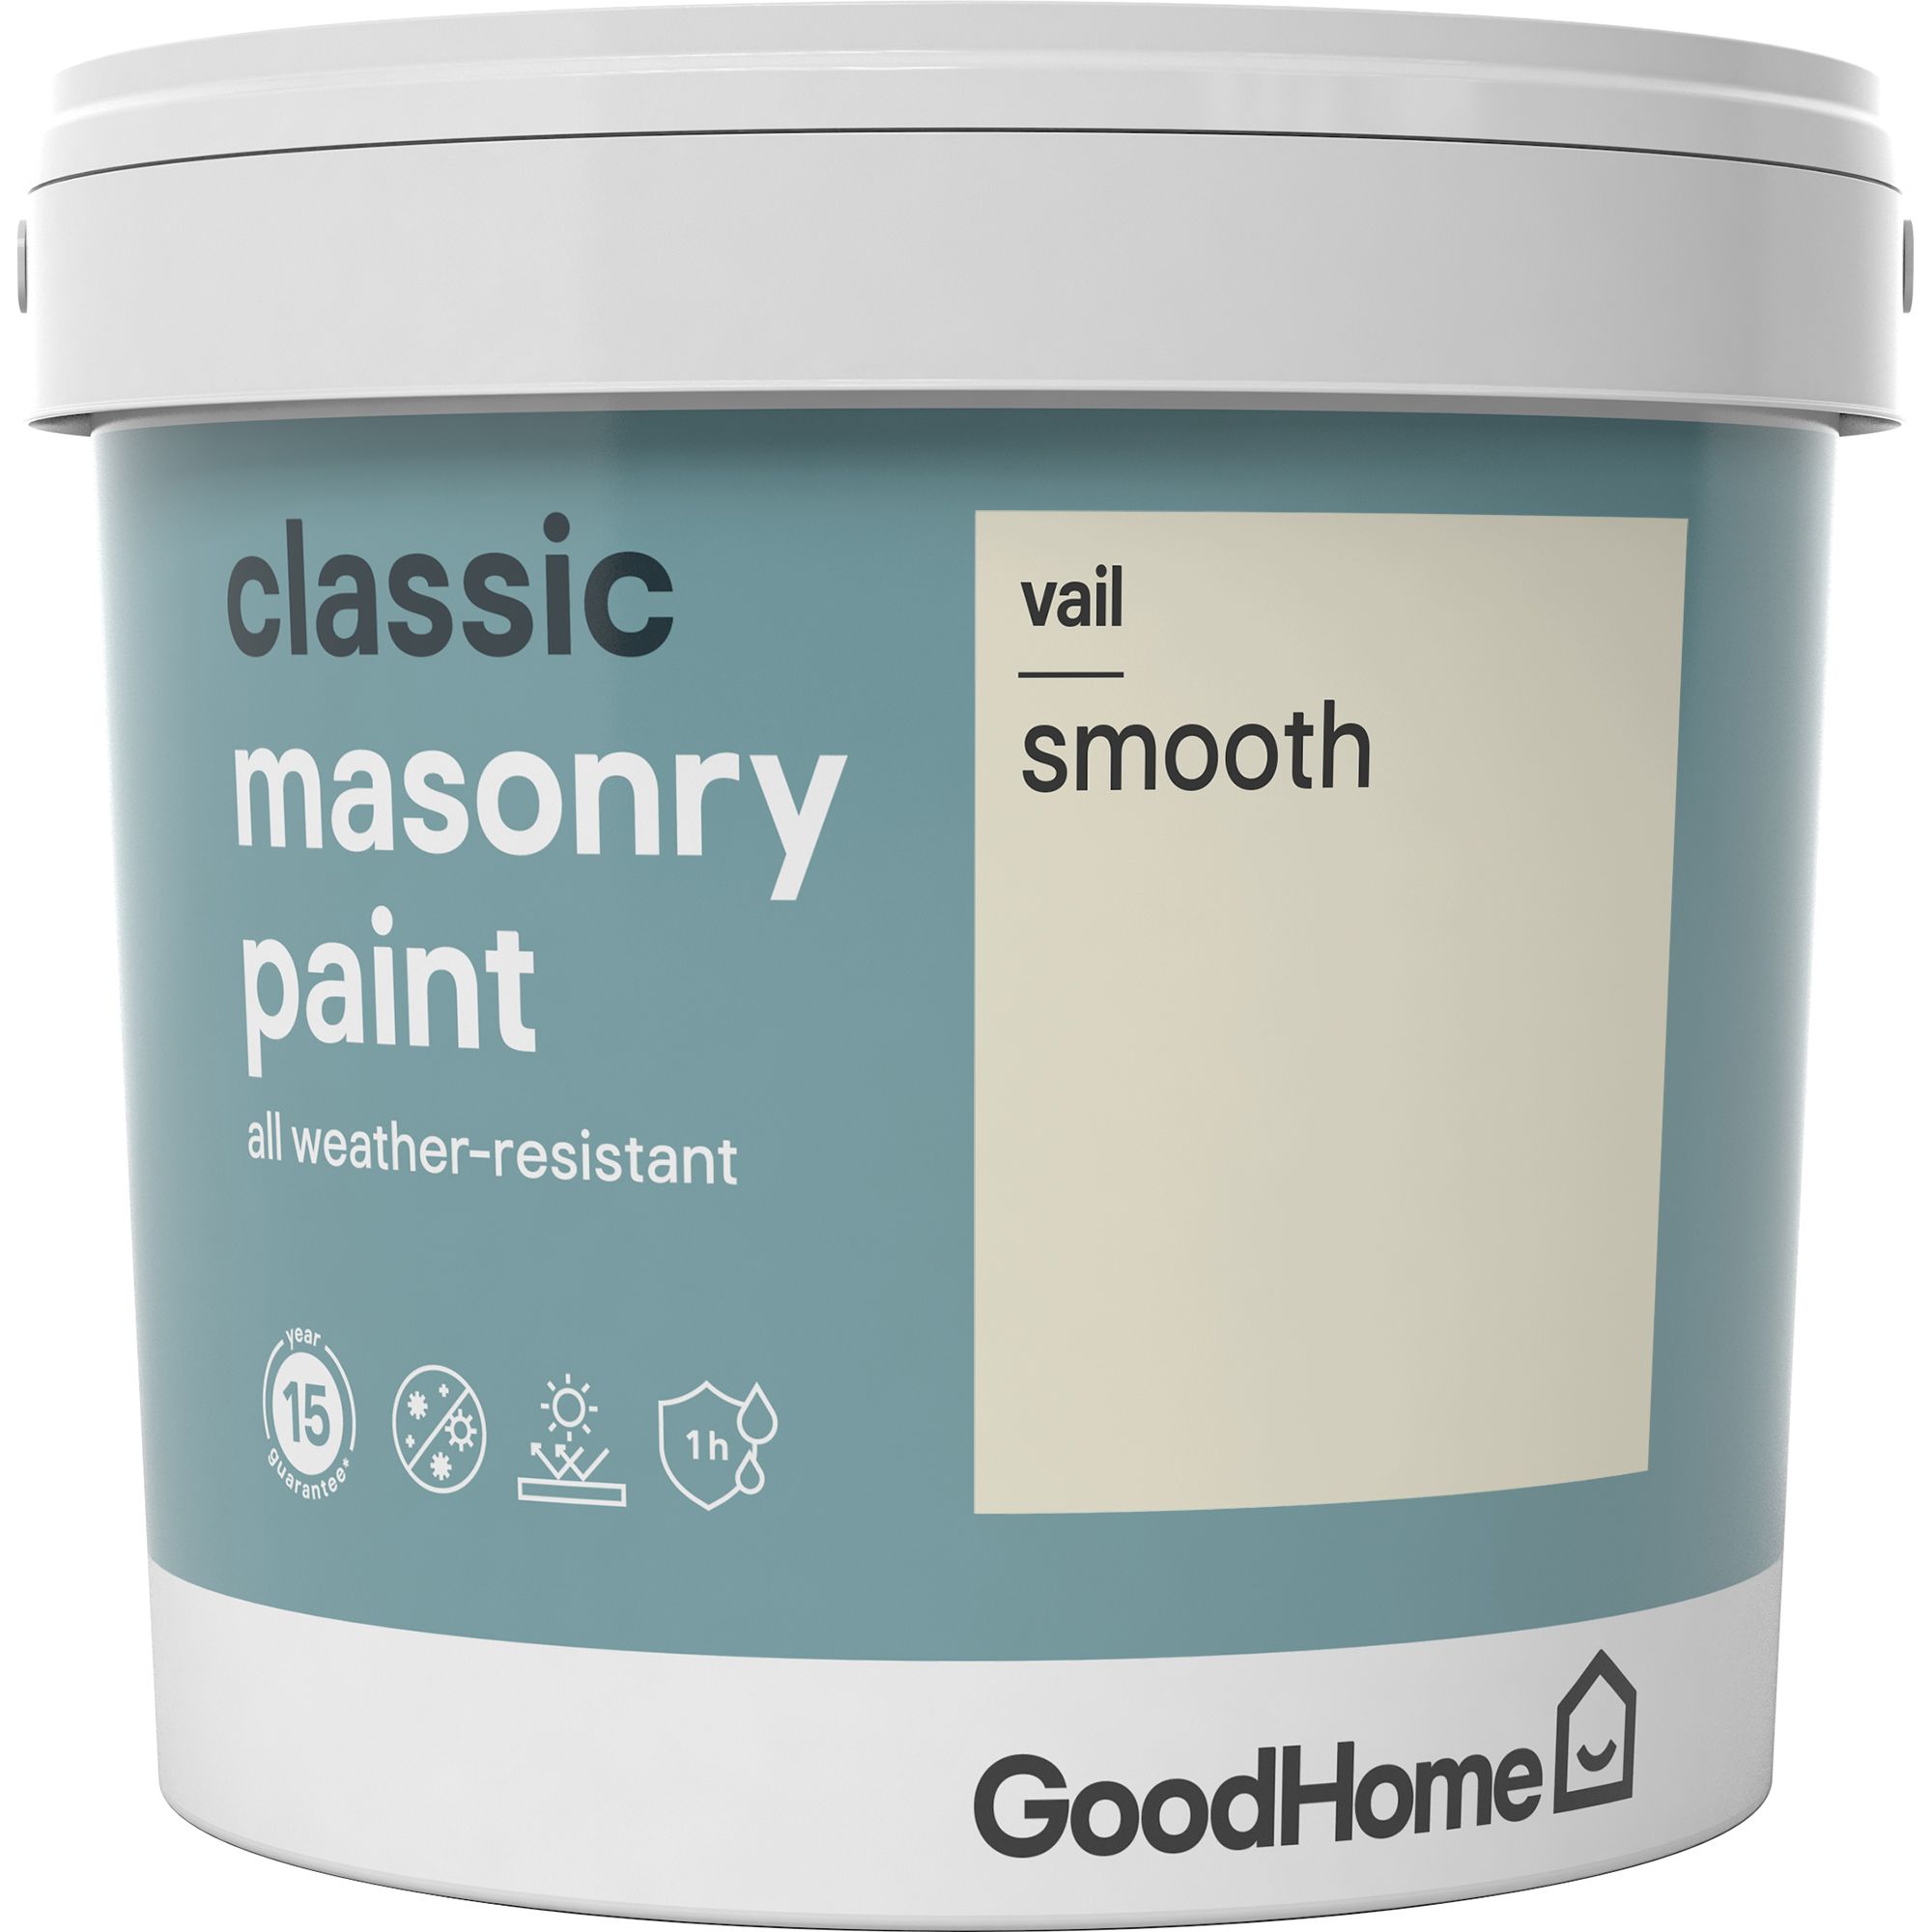 GoodHome Classic Vail Smooth Matt Masonry paint, 5L